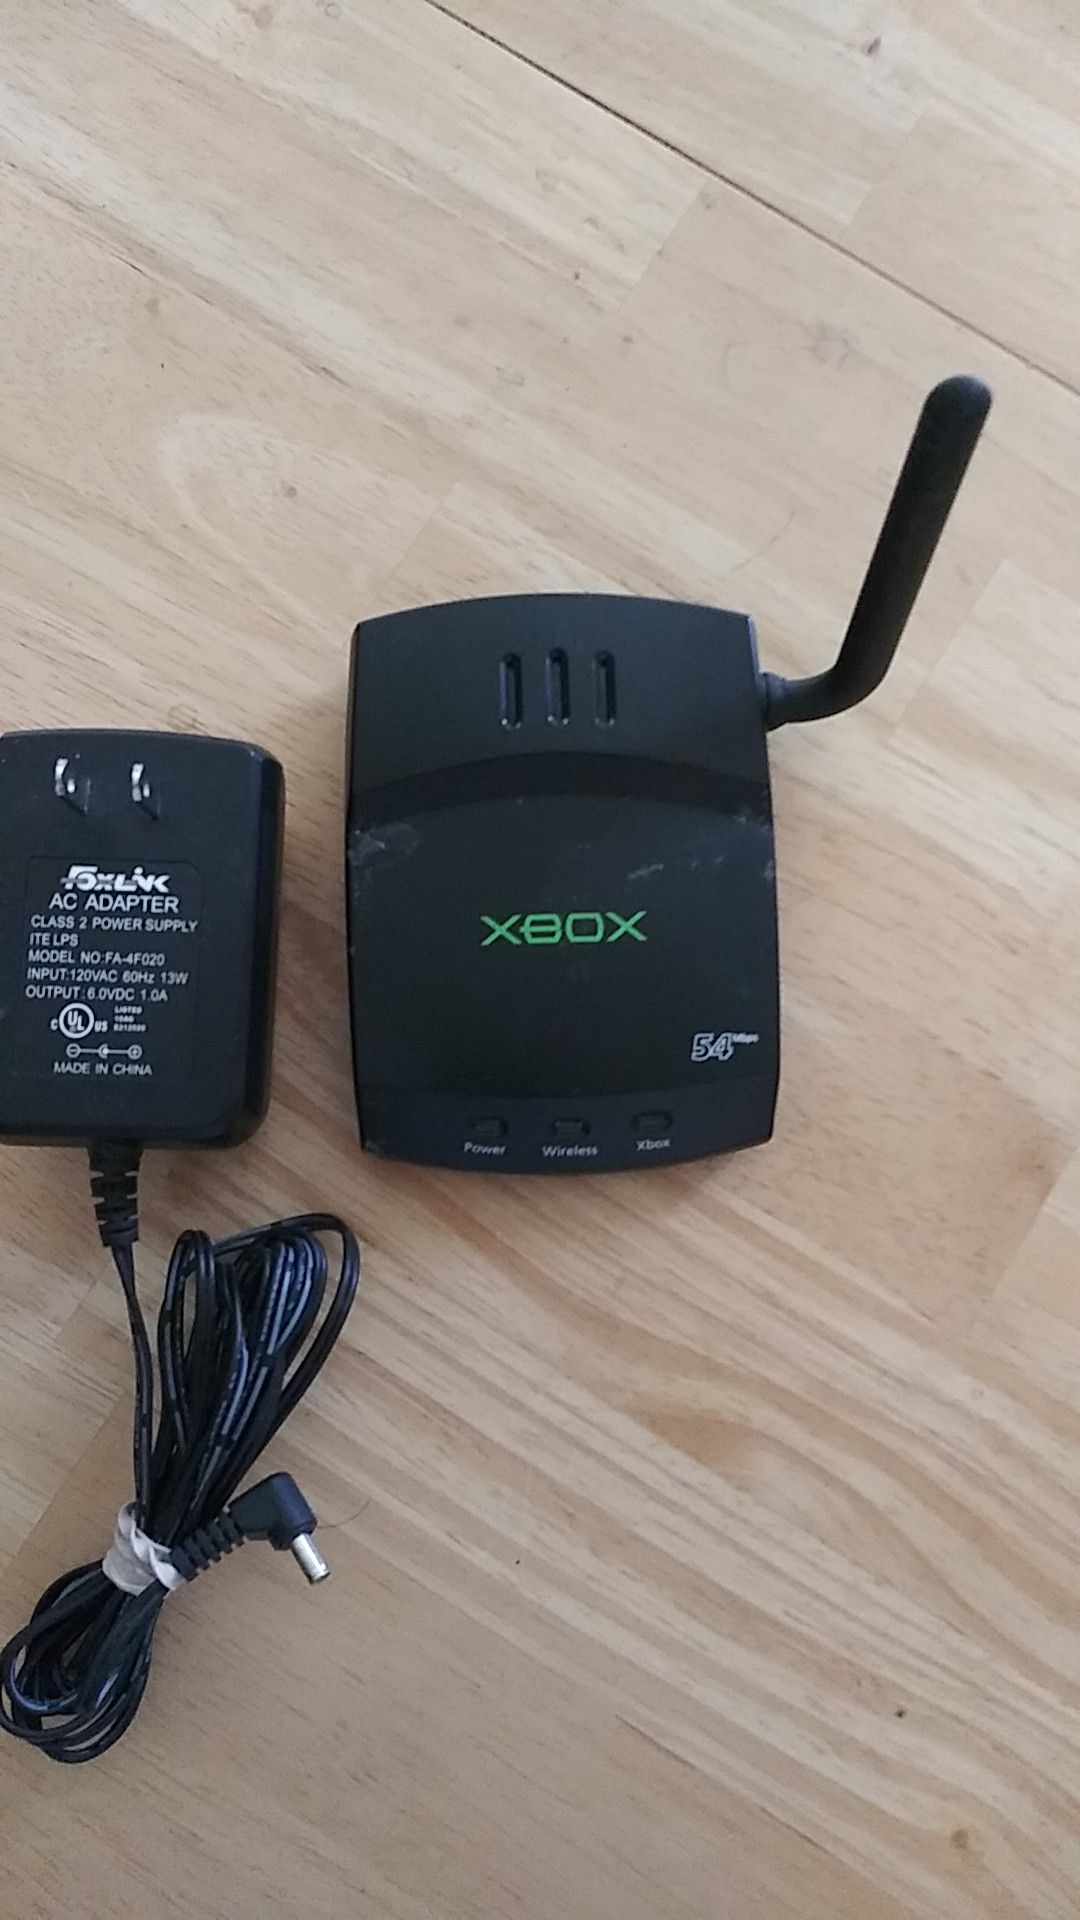 Xbox Wireless Wi Fi Router MN-740